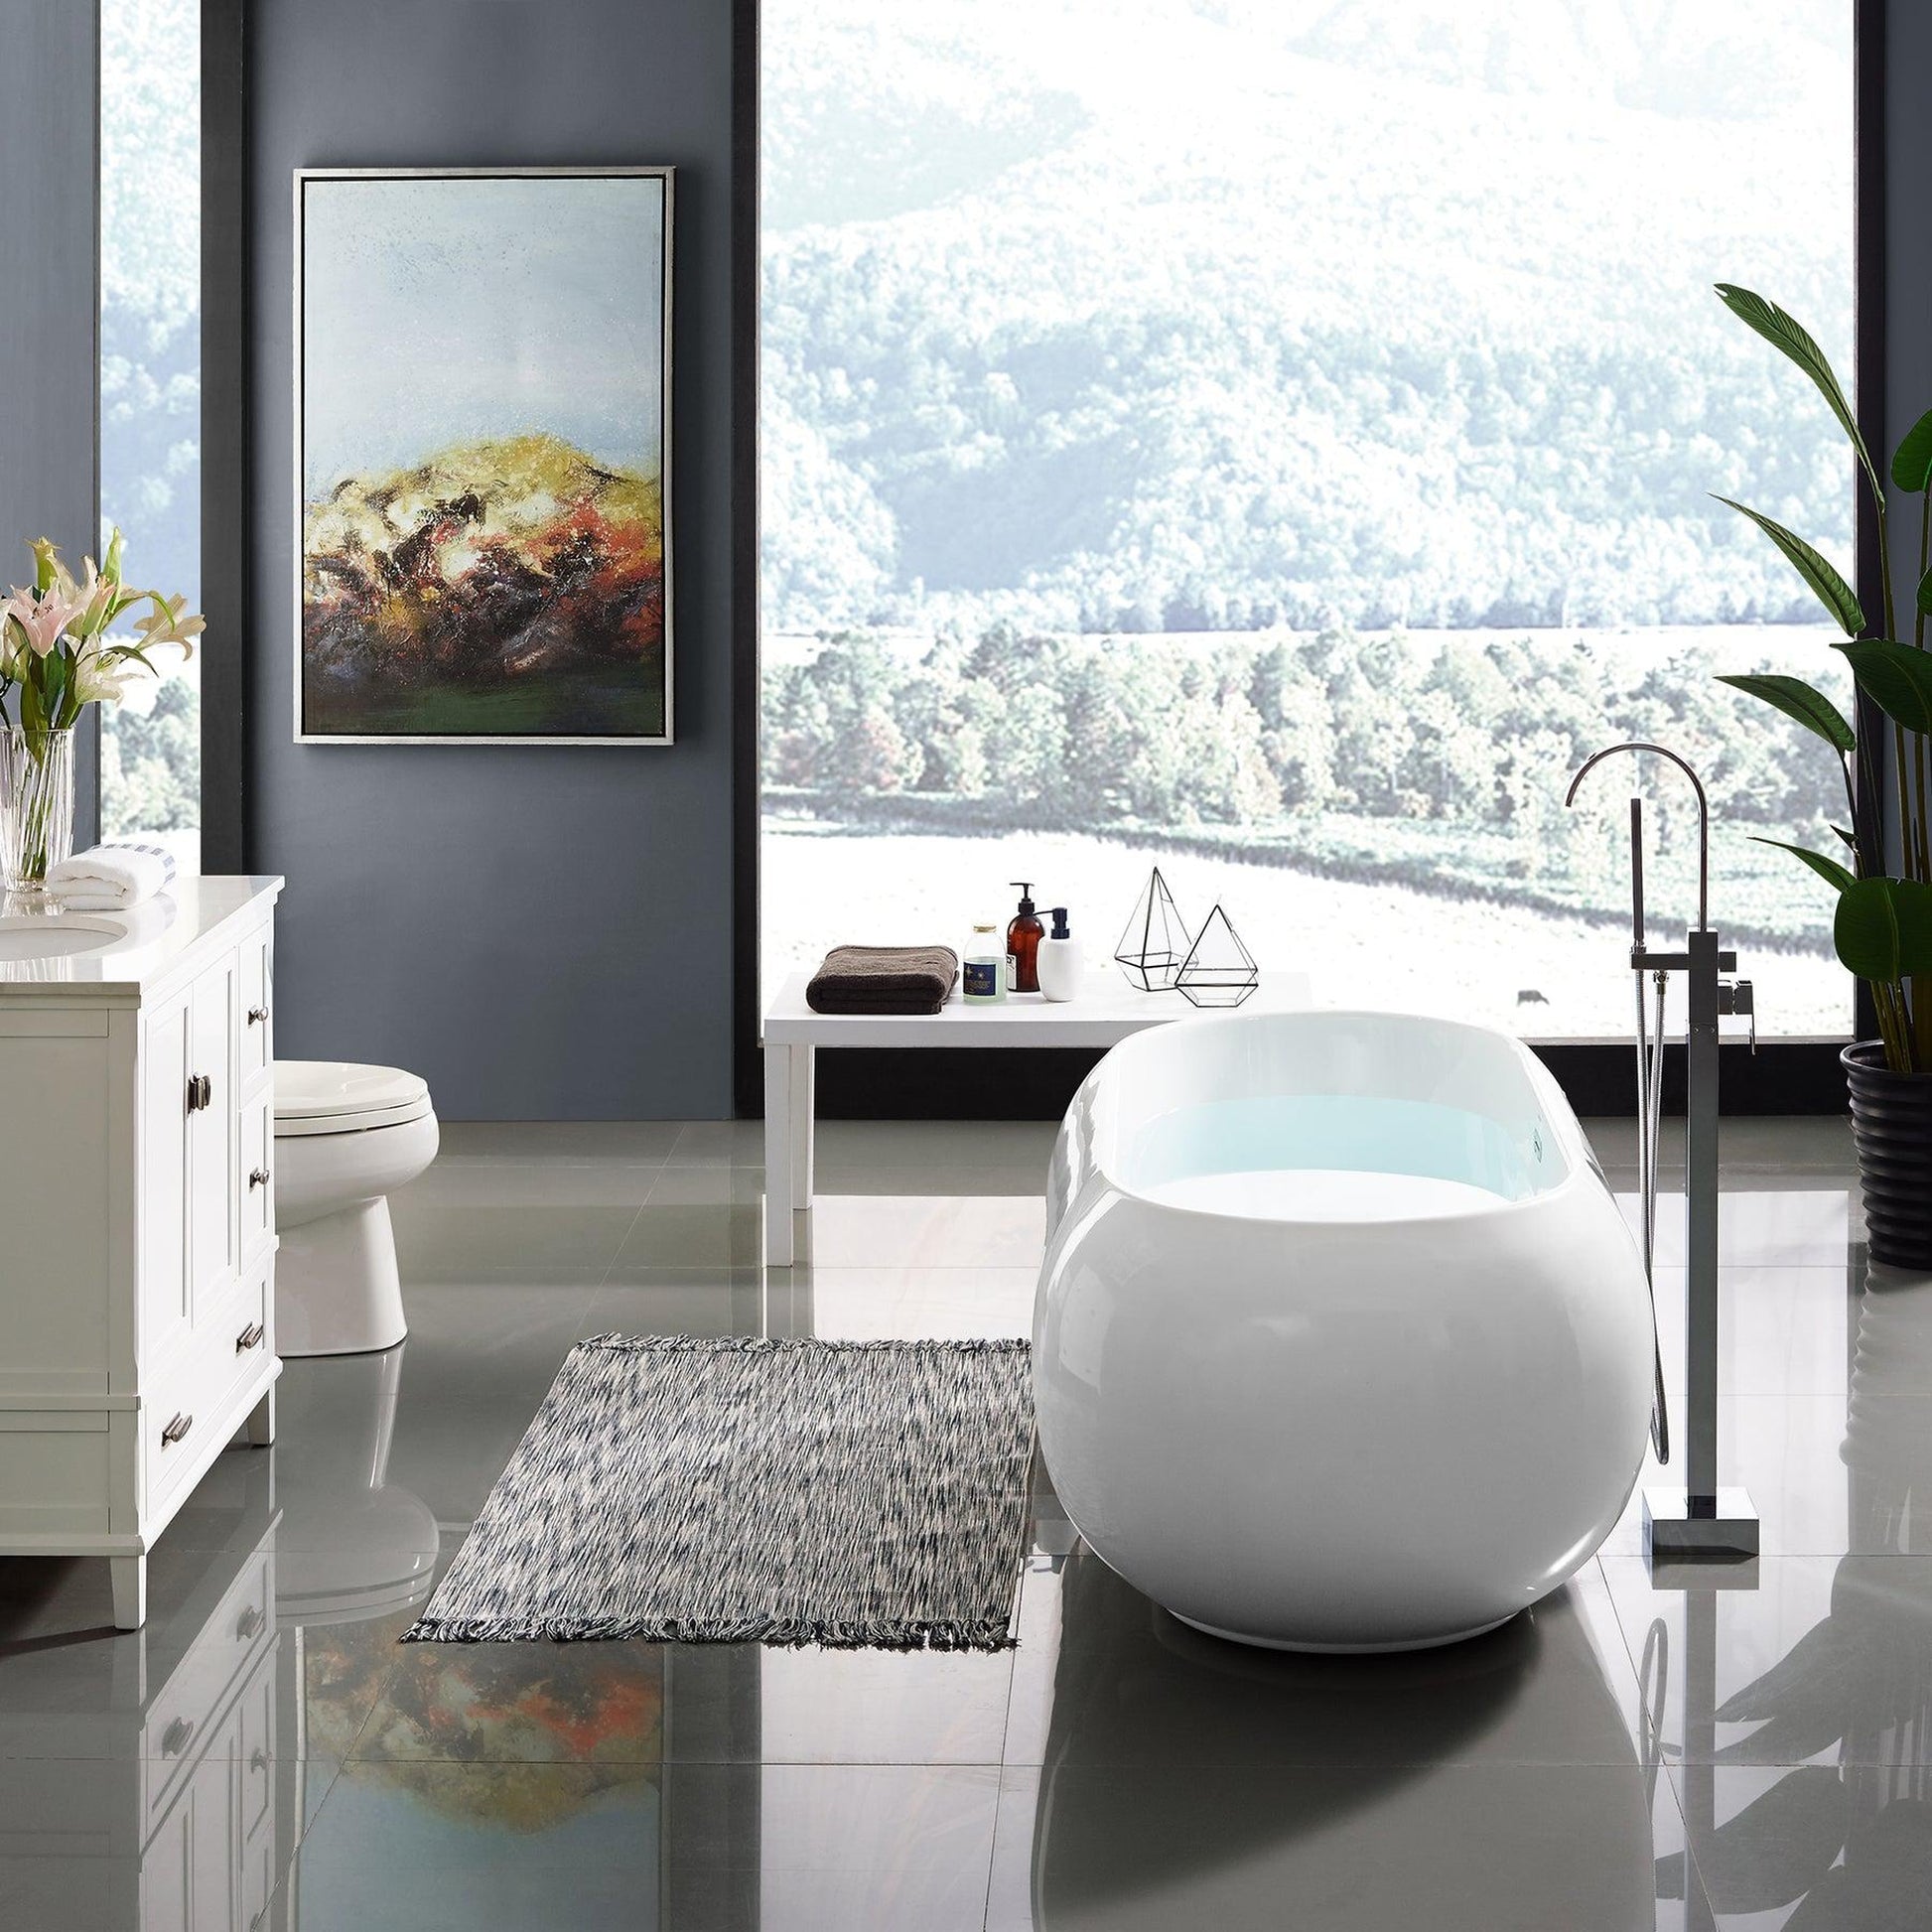 Swiss Madison Plaisir 63" x 32" White Center Drain Freestanding Bathtub With Chrome Toe-Tap Drain and Overflow